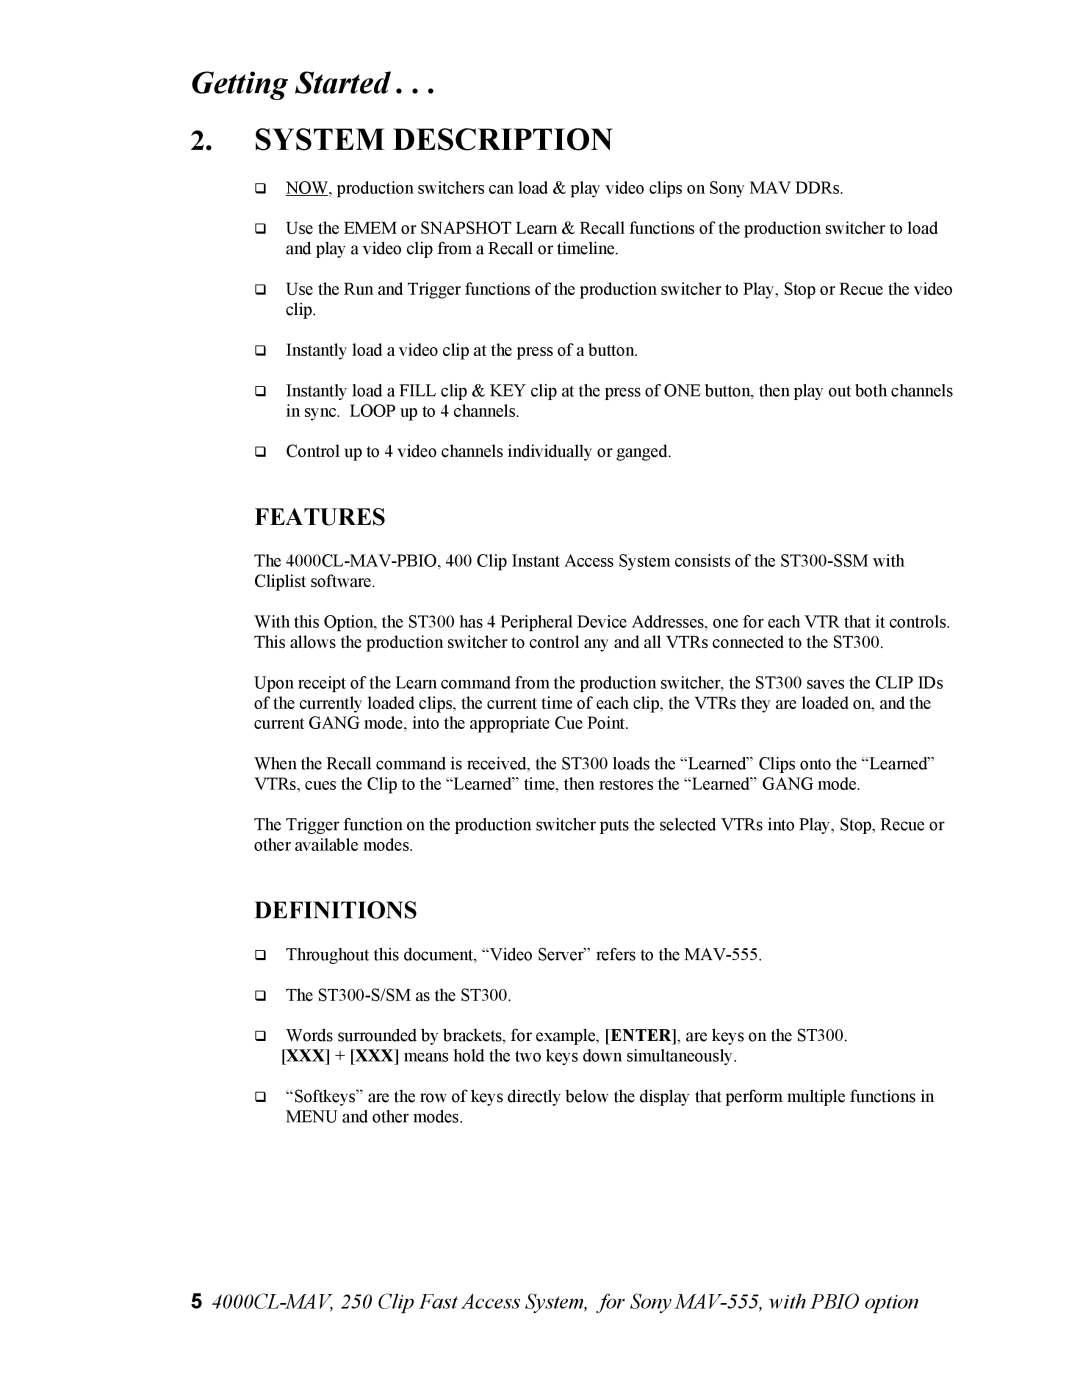 Sony 4000CL-MAV-PBIO user manual Getting Started, System Description 